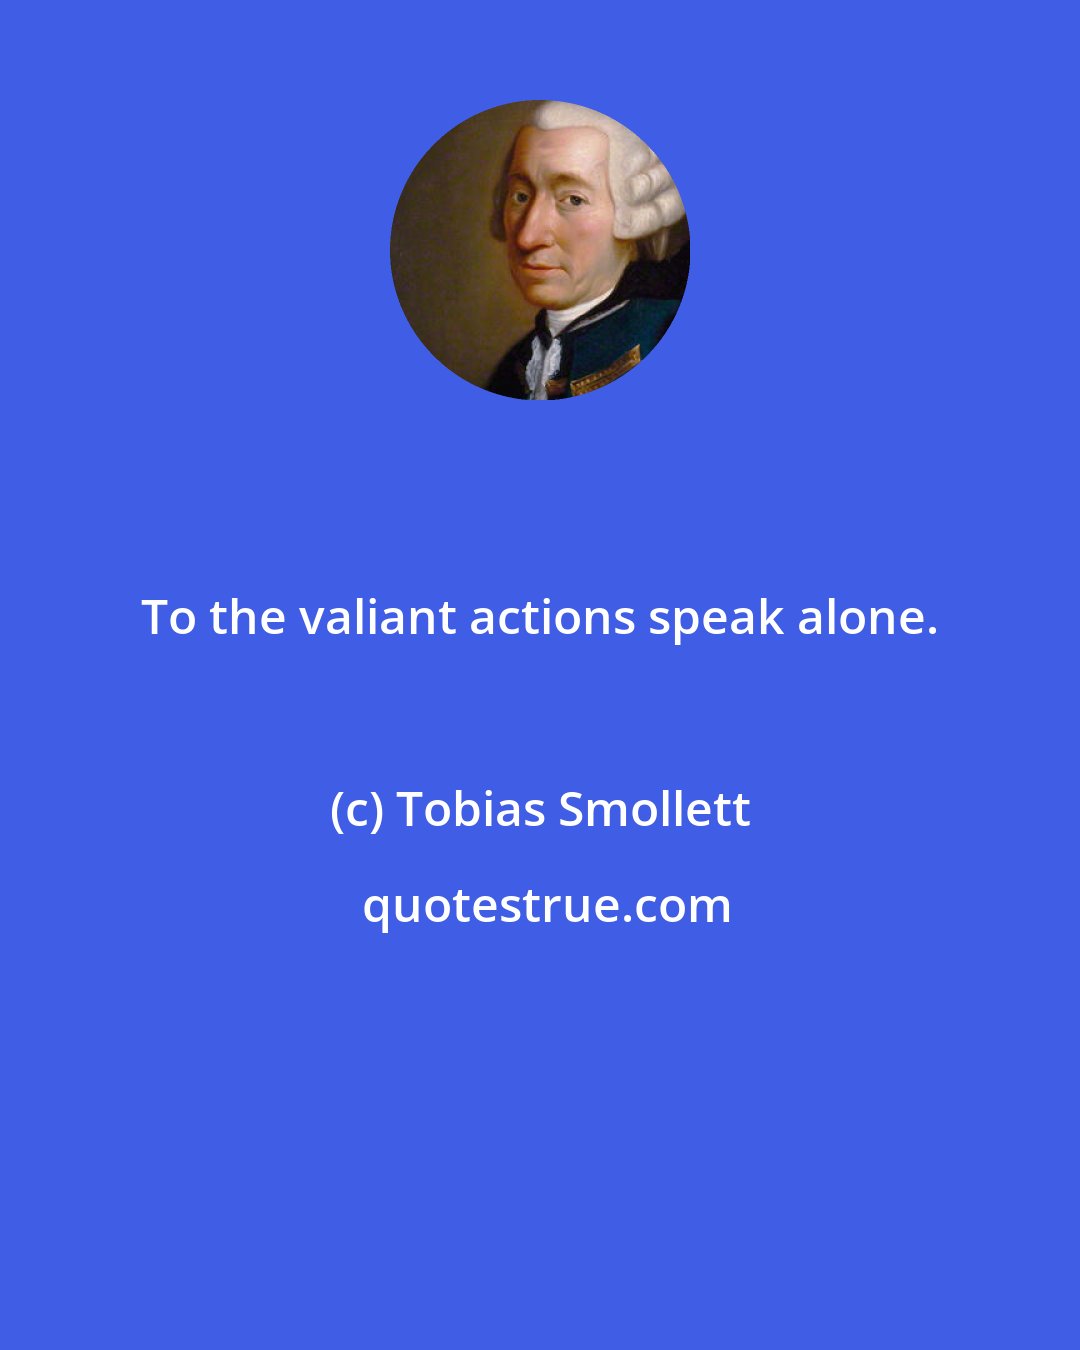 Tobias Smollett: To the valiant actions speak alone.